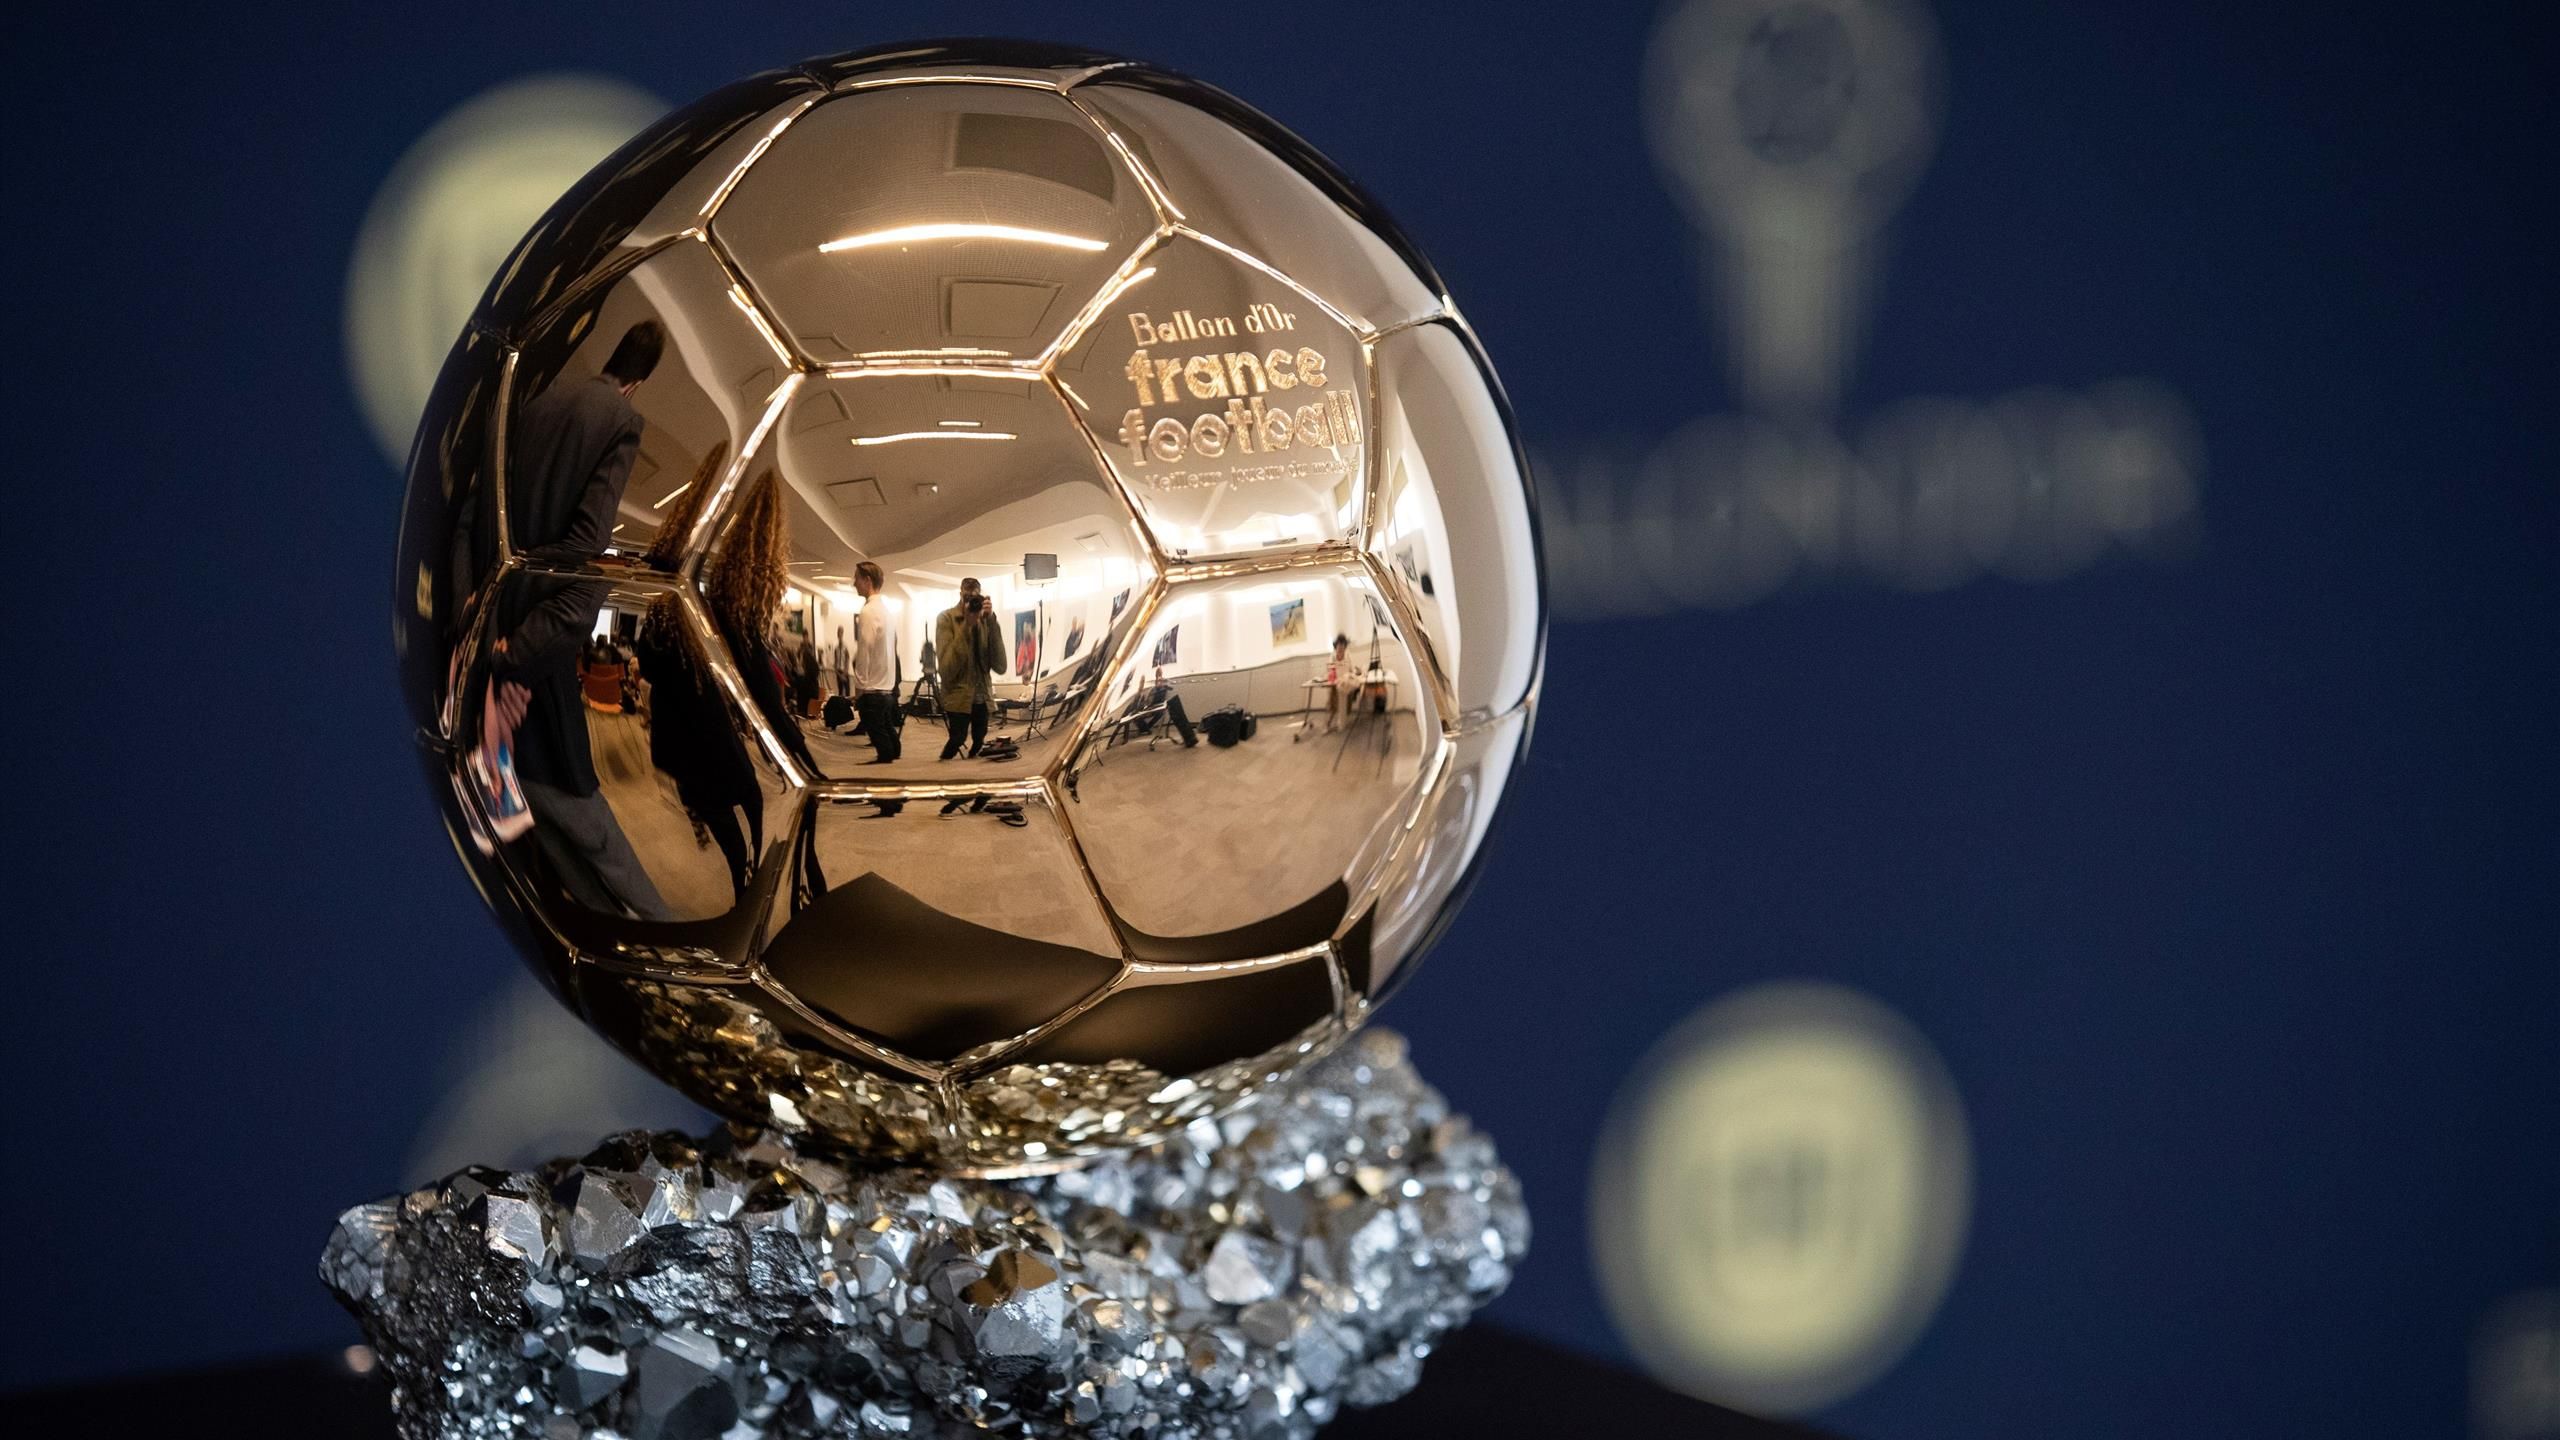 Ballon dOr 2021 How to watch free live stream of award ceremony with Eurosport, TV details